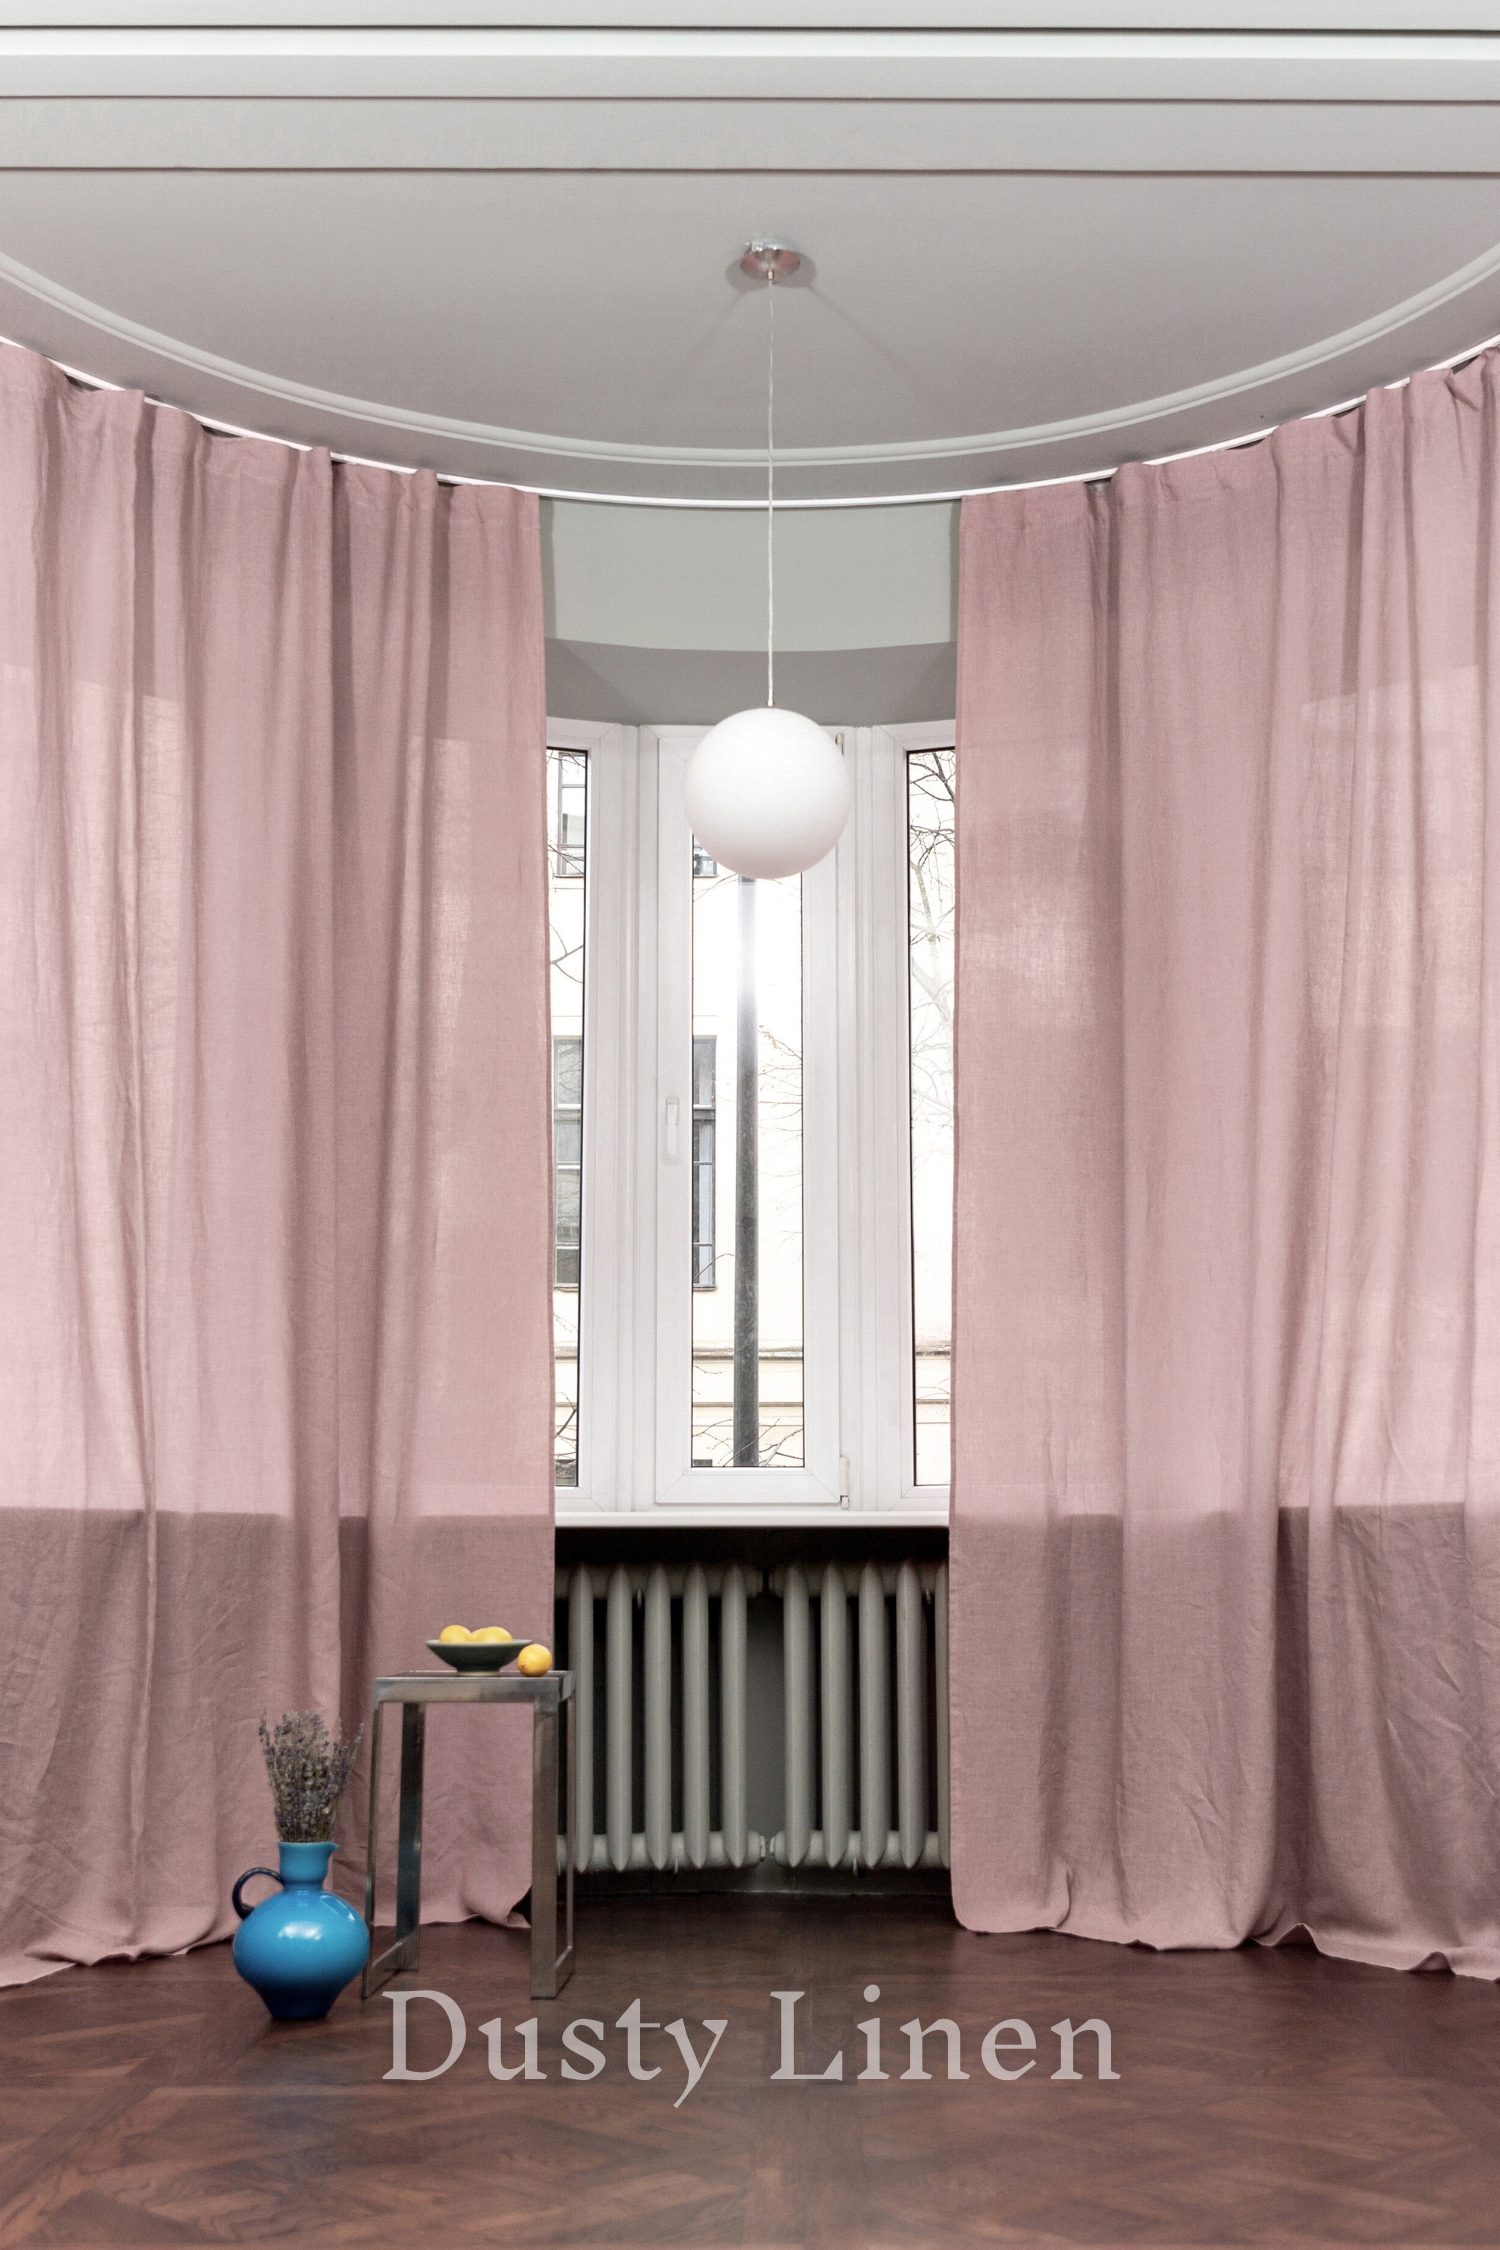 100% Linen Curtains - Dusty rose. Dusty linen